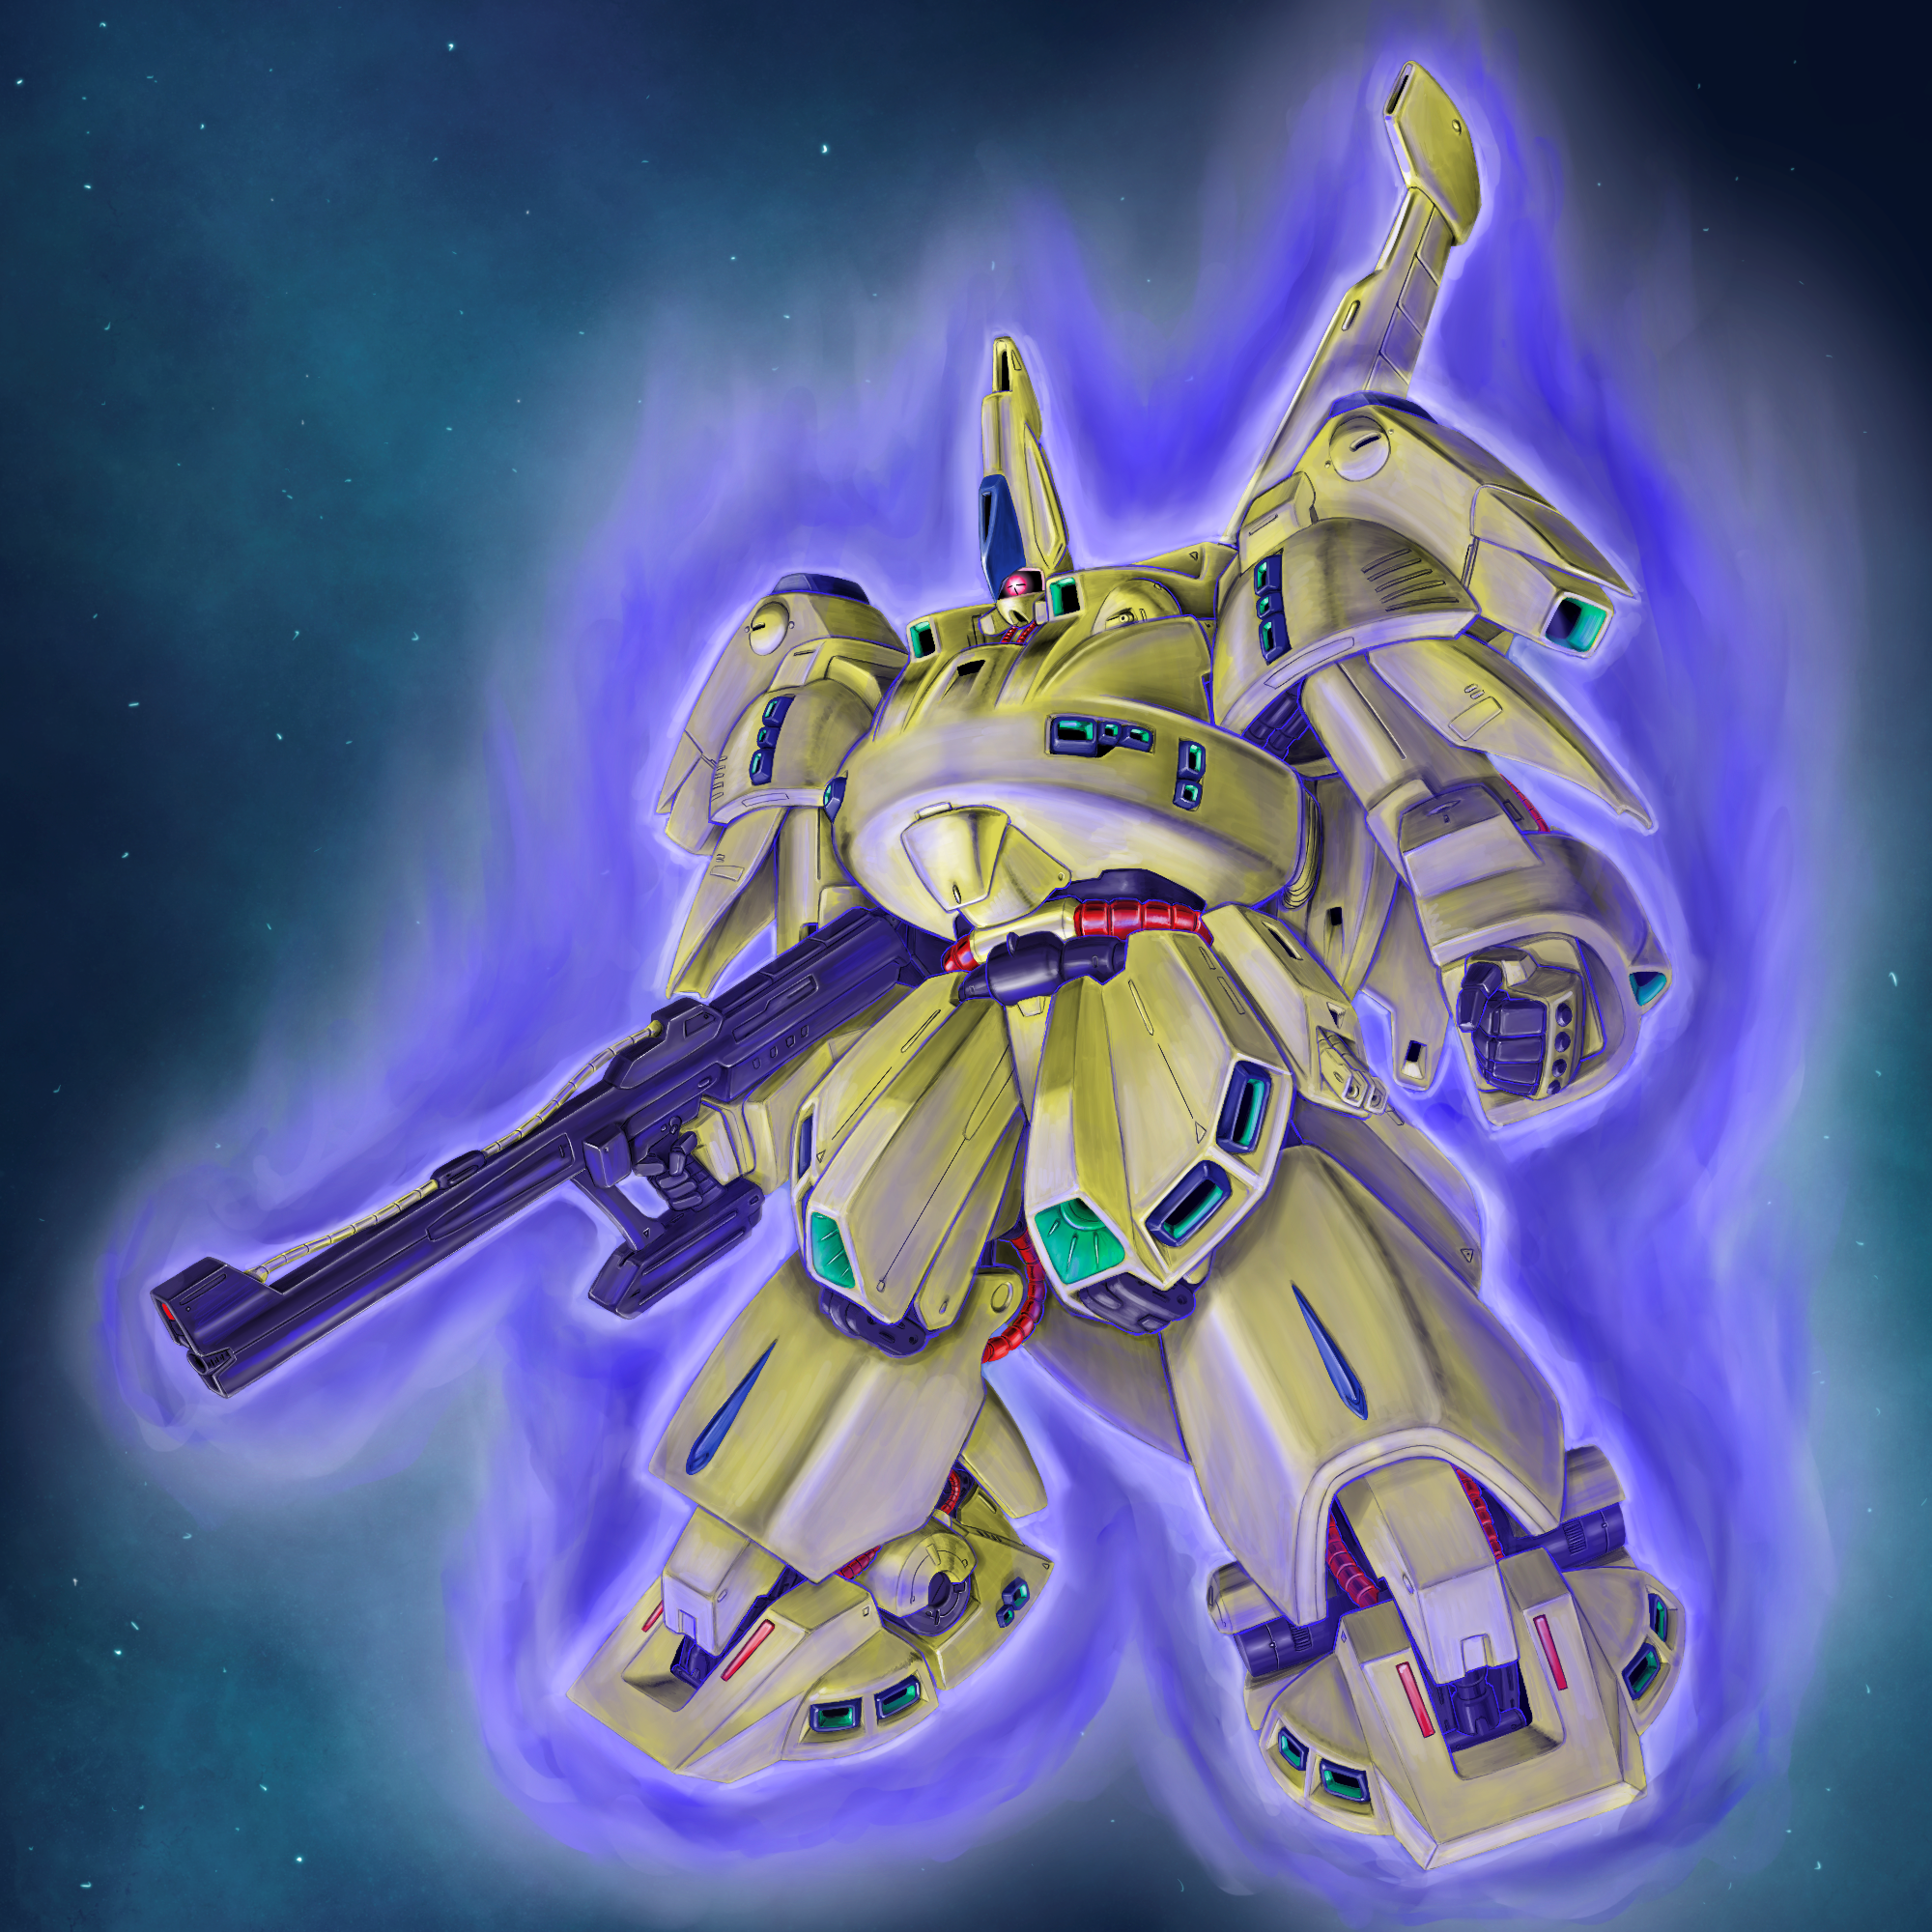 The O Mobile Suit Zeta Gundam Mobile Suit Anime Mechs Super Robot Taisen Artwork Digital Art Fan Art 2000x2000